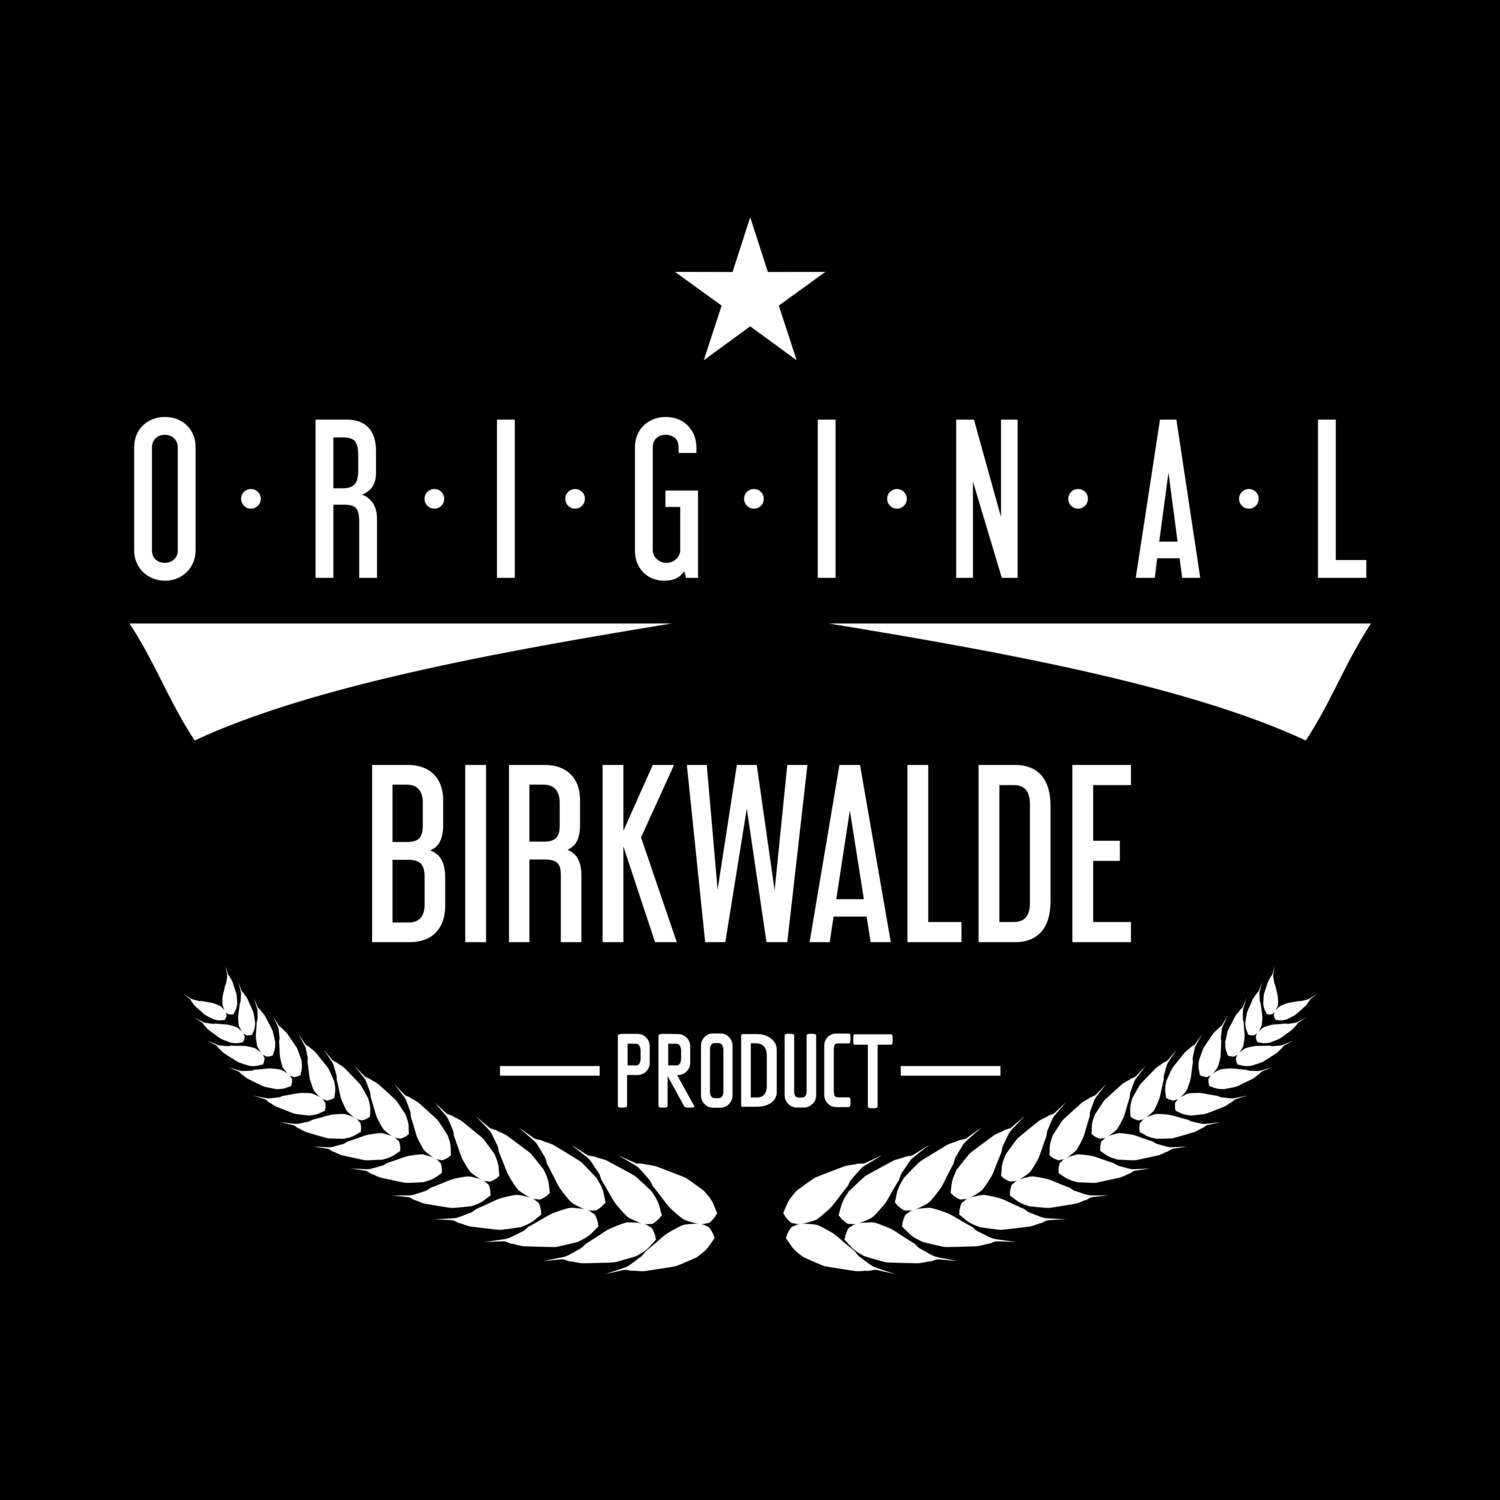 Birkwalde T-Shirt »Original Product«